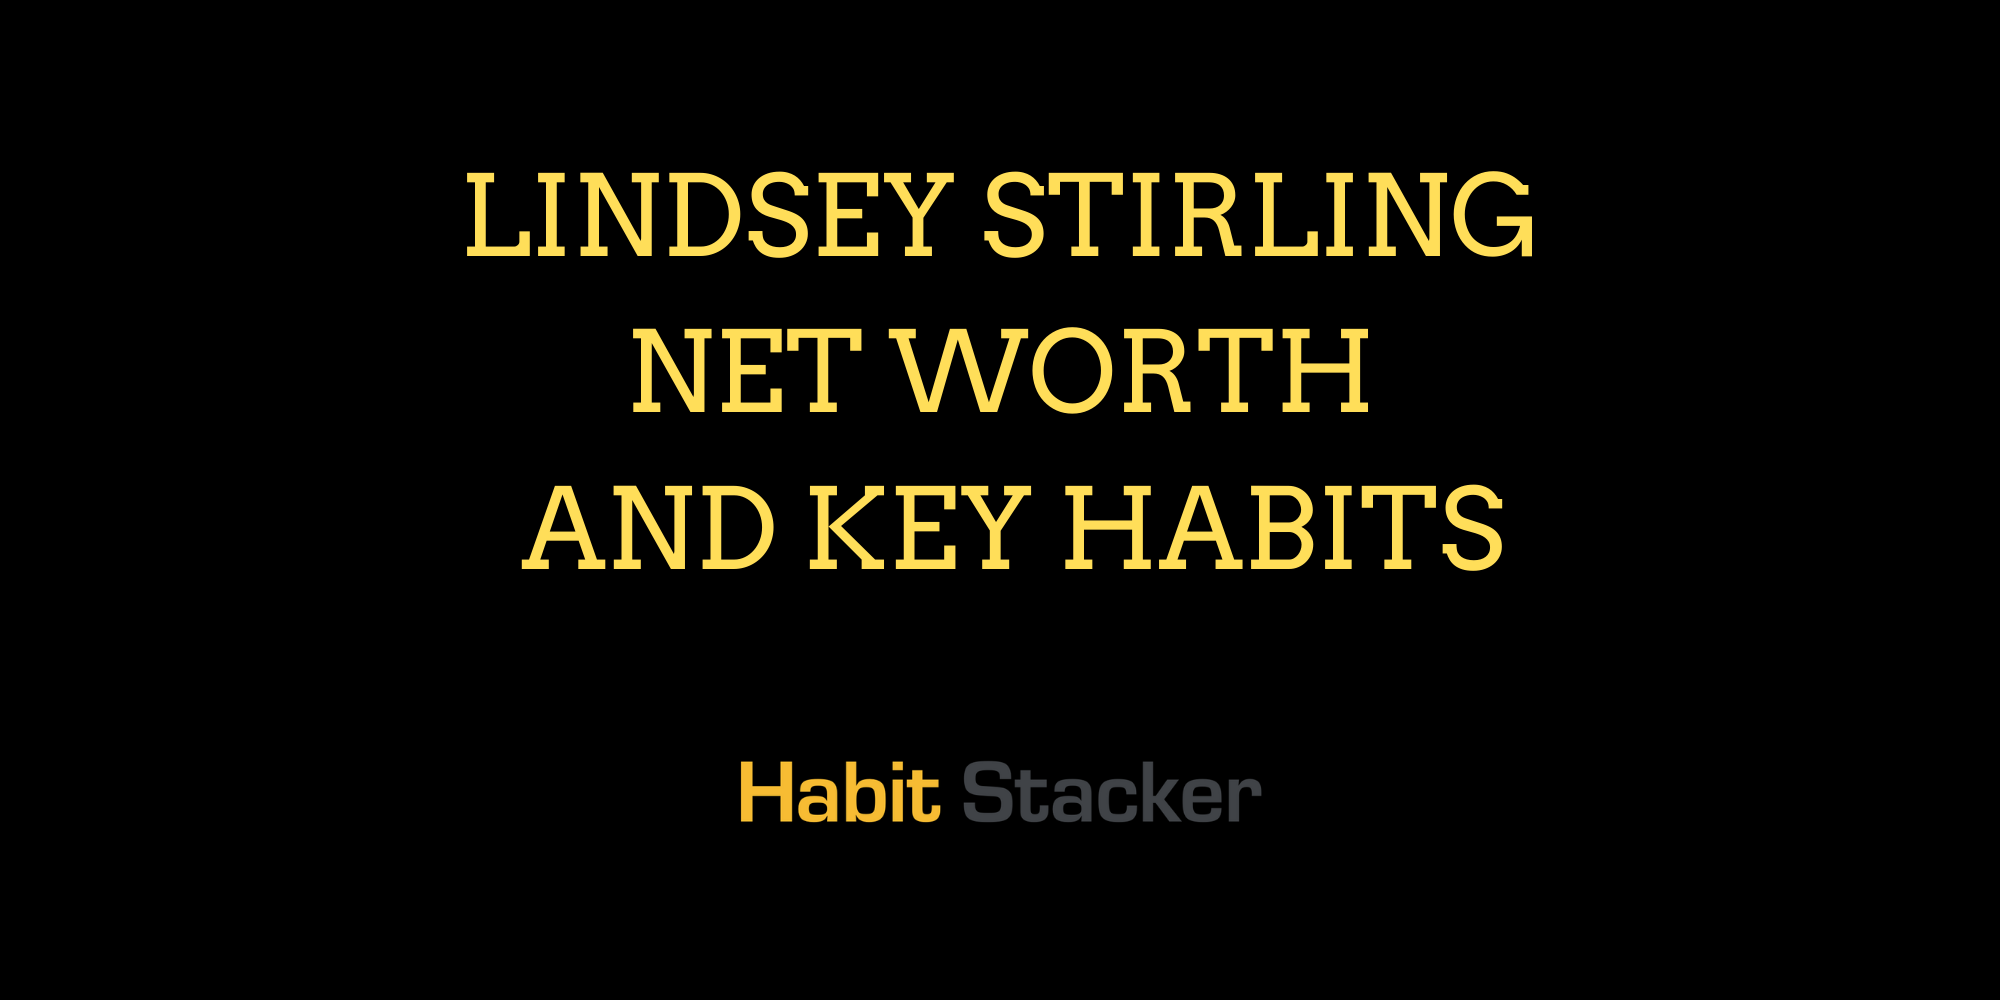 Lindsey Stirling Net Worth and Key Habits